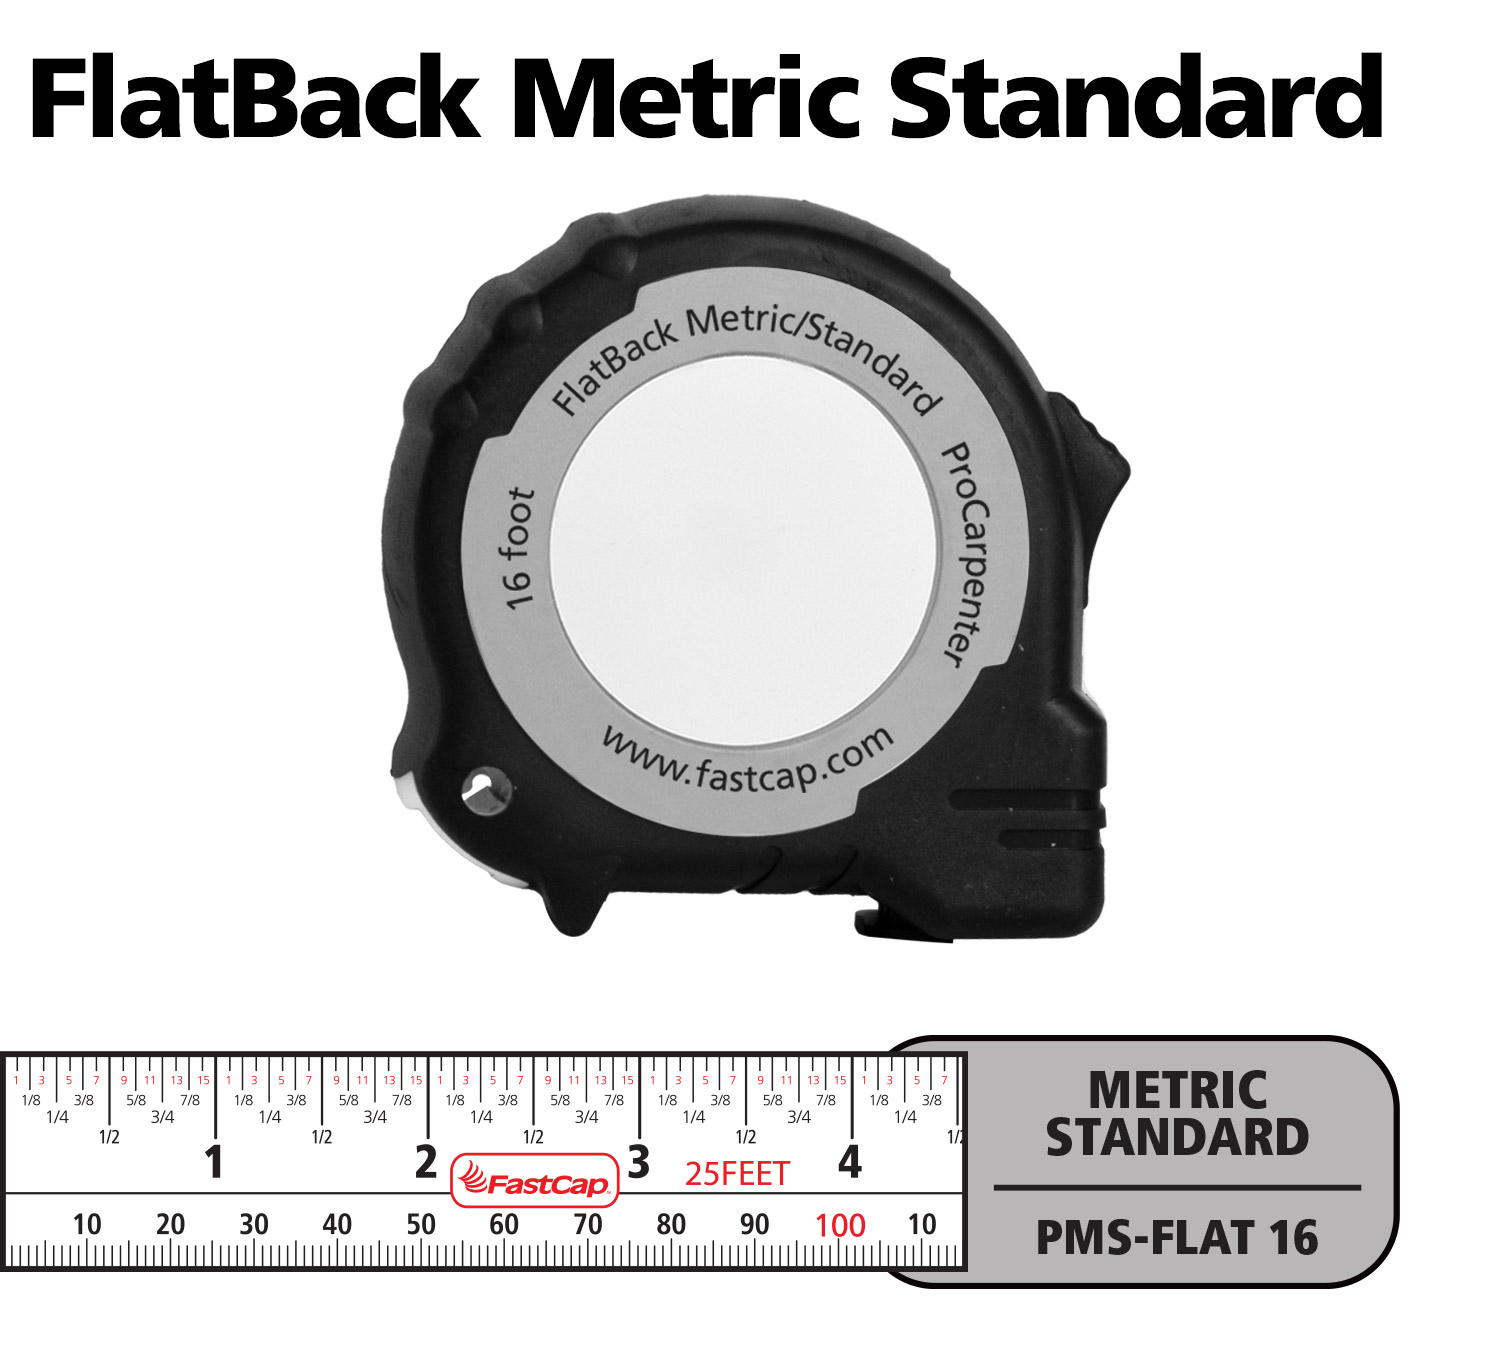  FastCap ProCarpenter True32 Metric Reverse Measuring